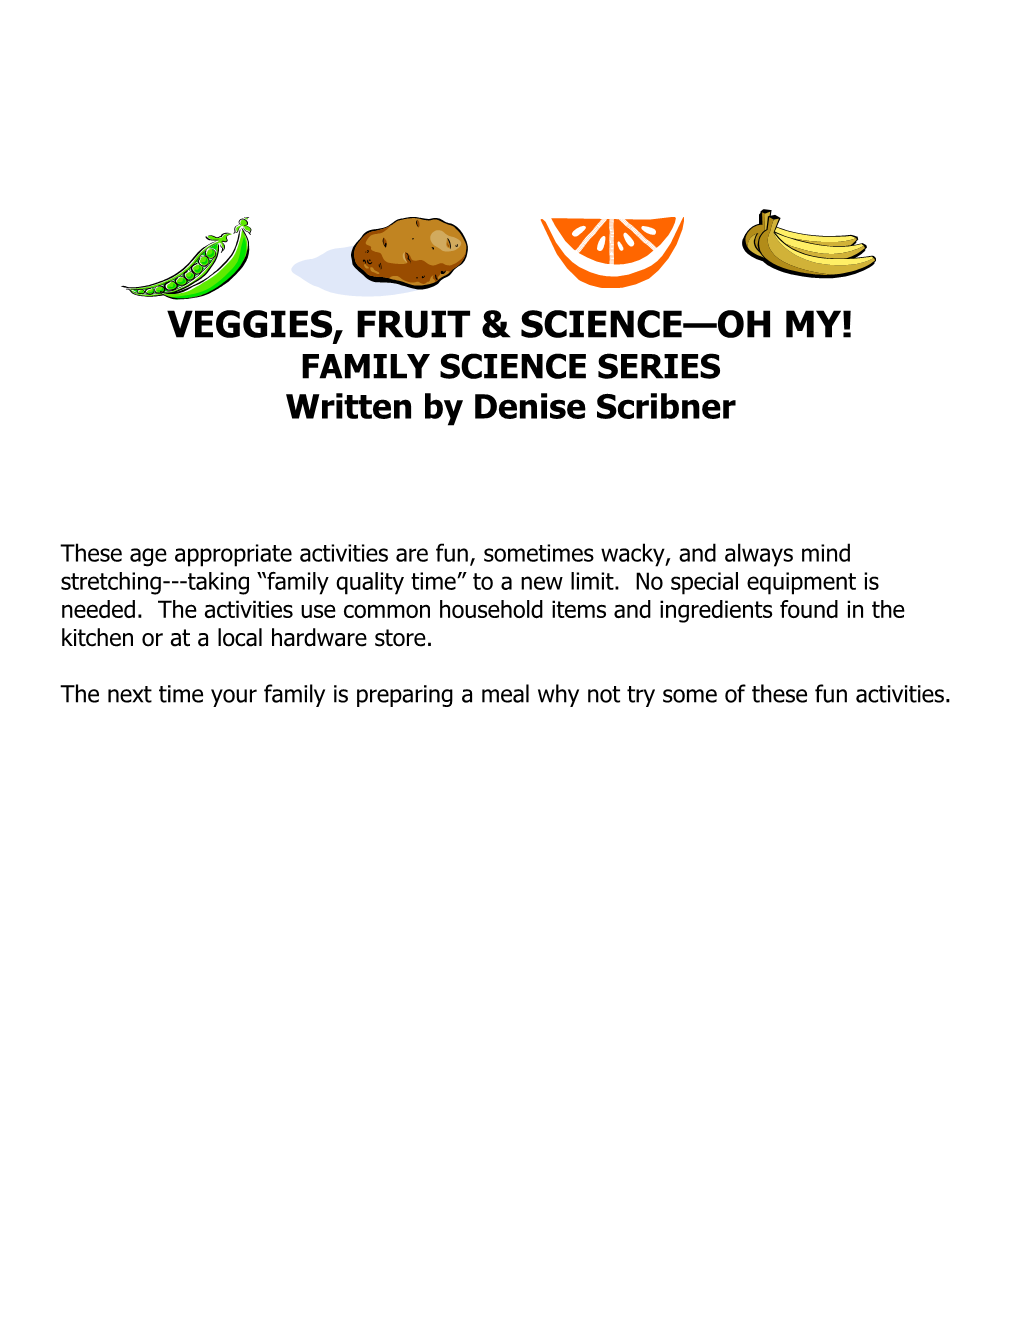 Veggies, Fruit & Science Oh My!